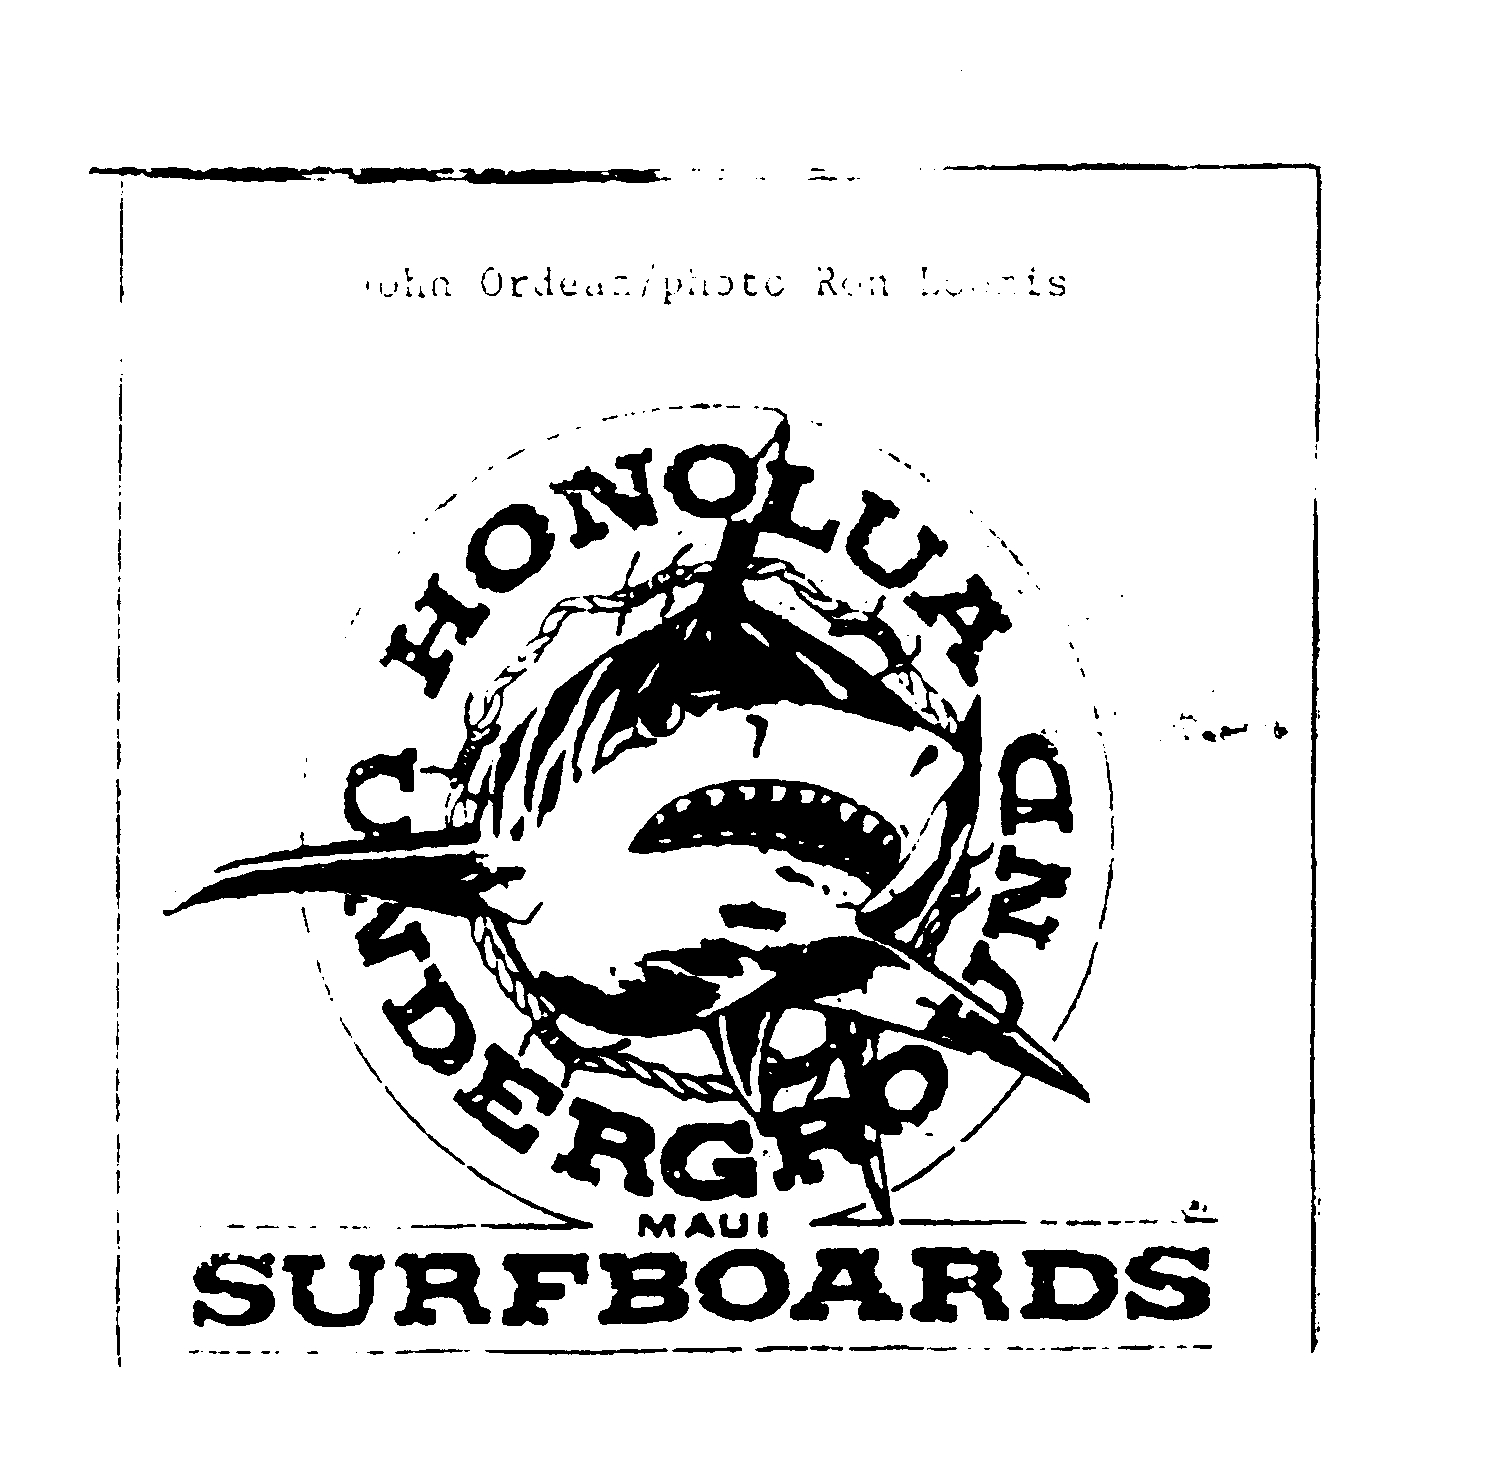  JOHN ORDEAN/PHOTO RON LOQMIS HONOLUA UNDERGROUND MAUI SURFBOARDS